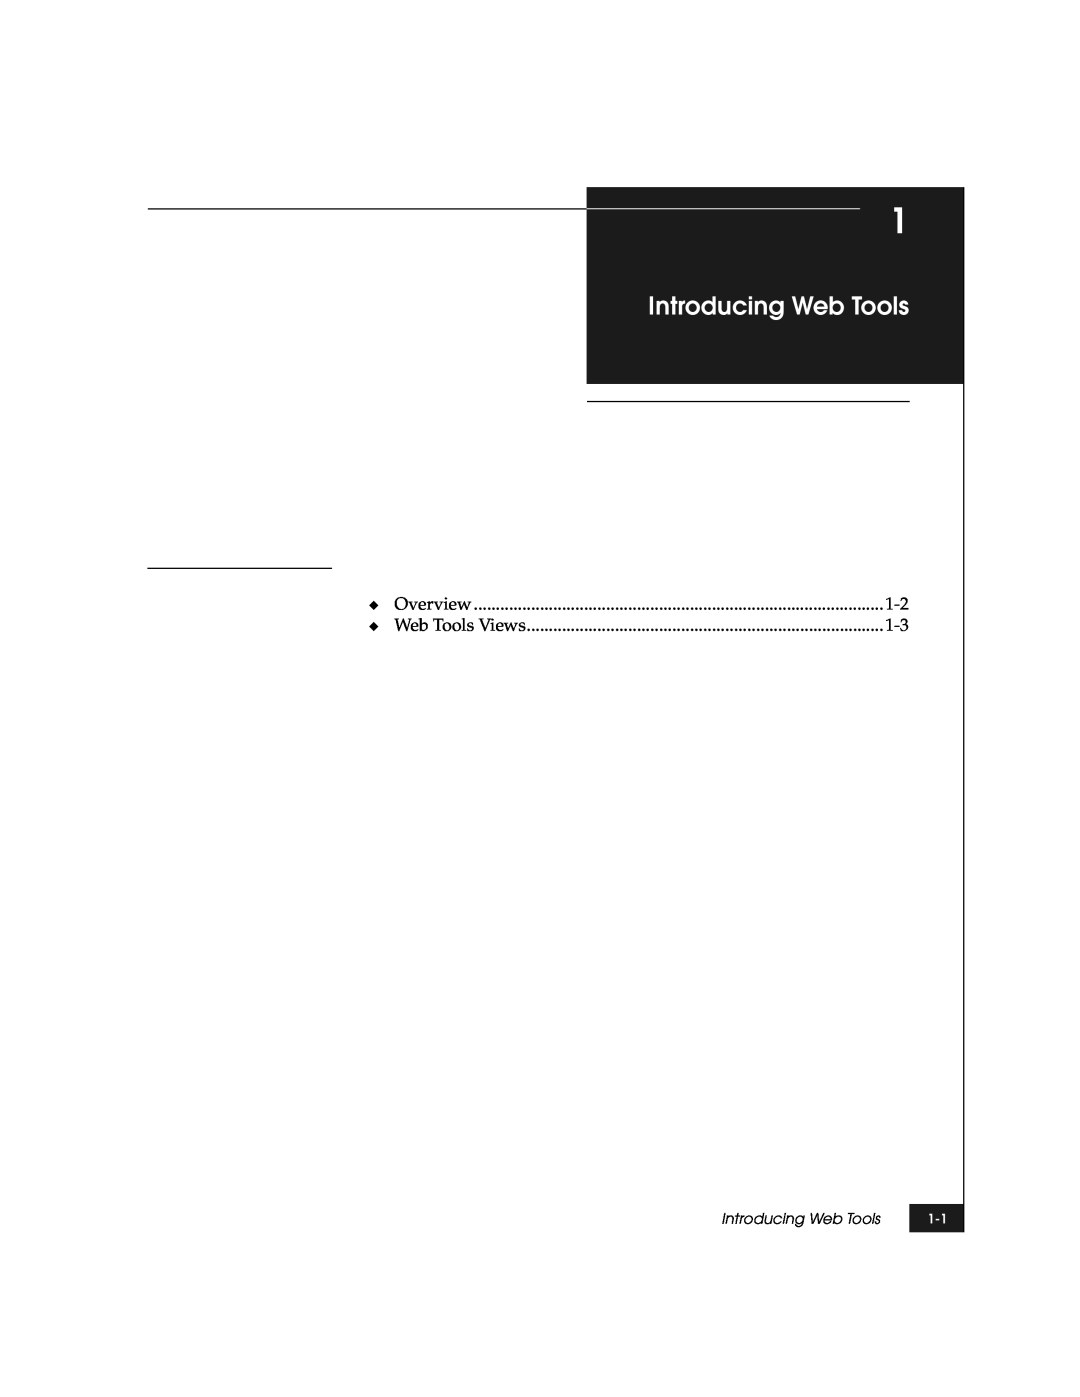 EMC DS-8B manual Introducing Web Tools 